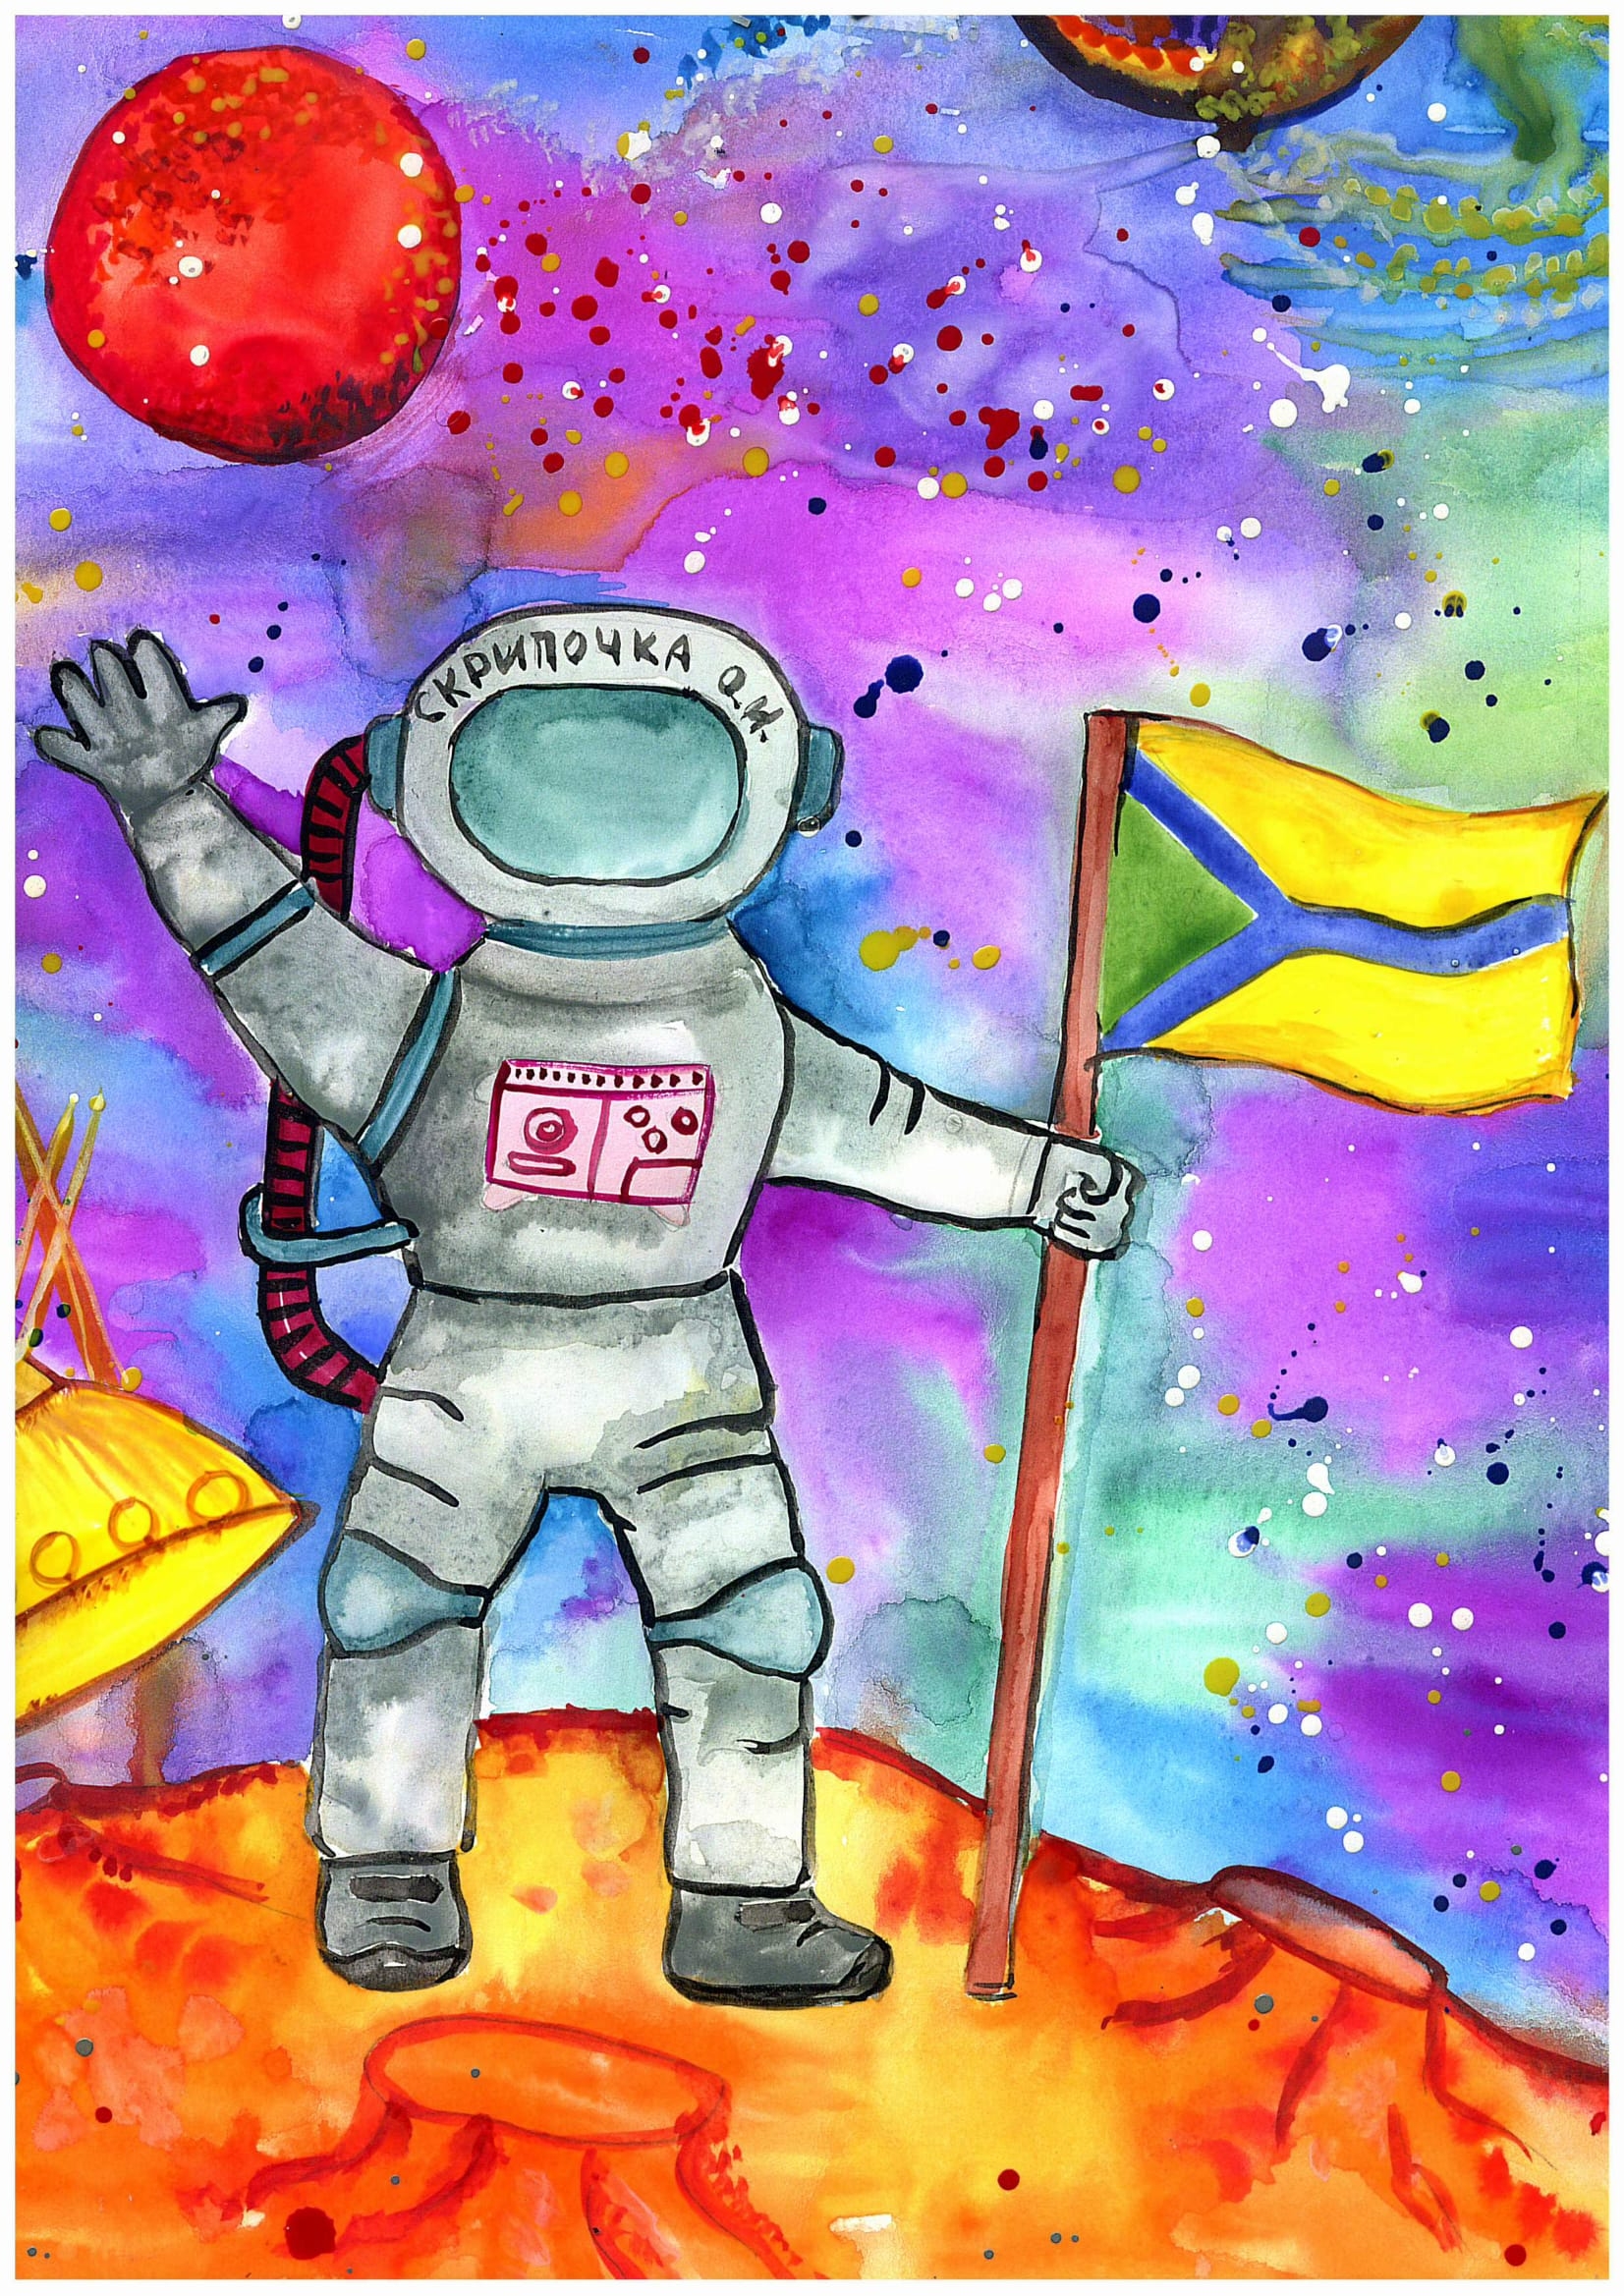 Рисунок на тему космонавт. Рисунок на тему космос. Детские рисунки на тему космос. Рисунок на тему космонавтики. Рисунок ко Дню космонавтики.